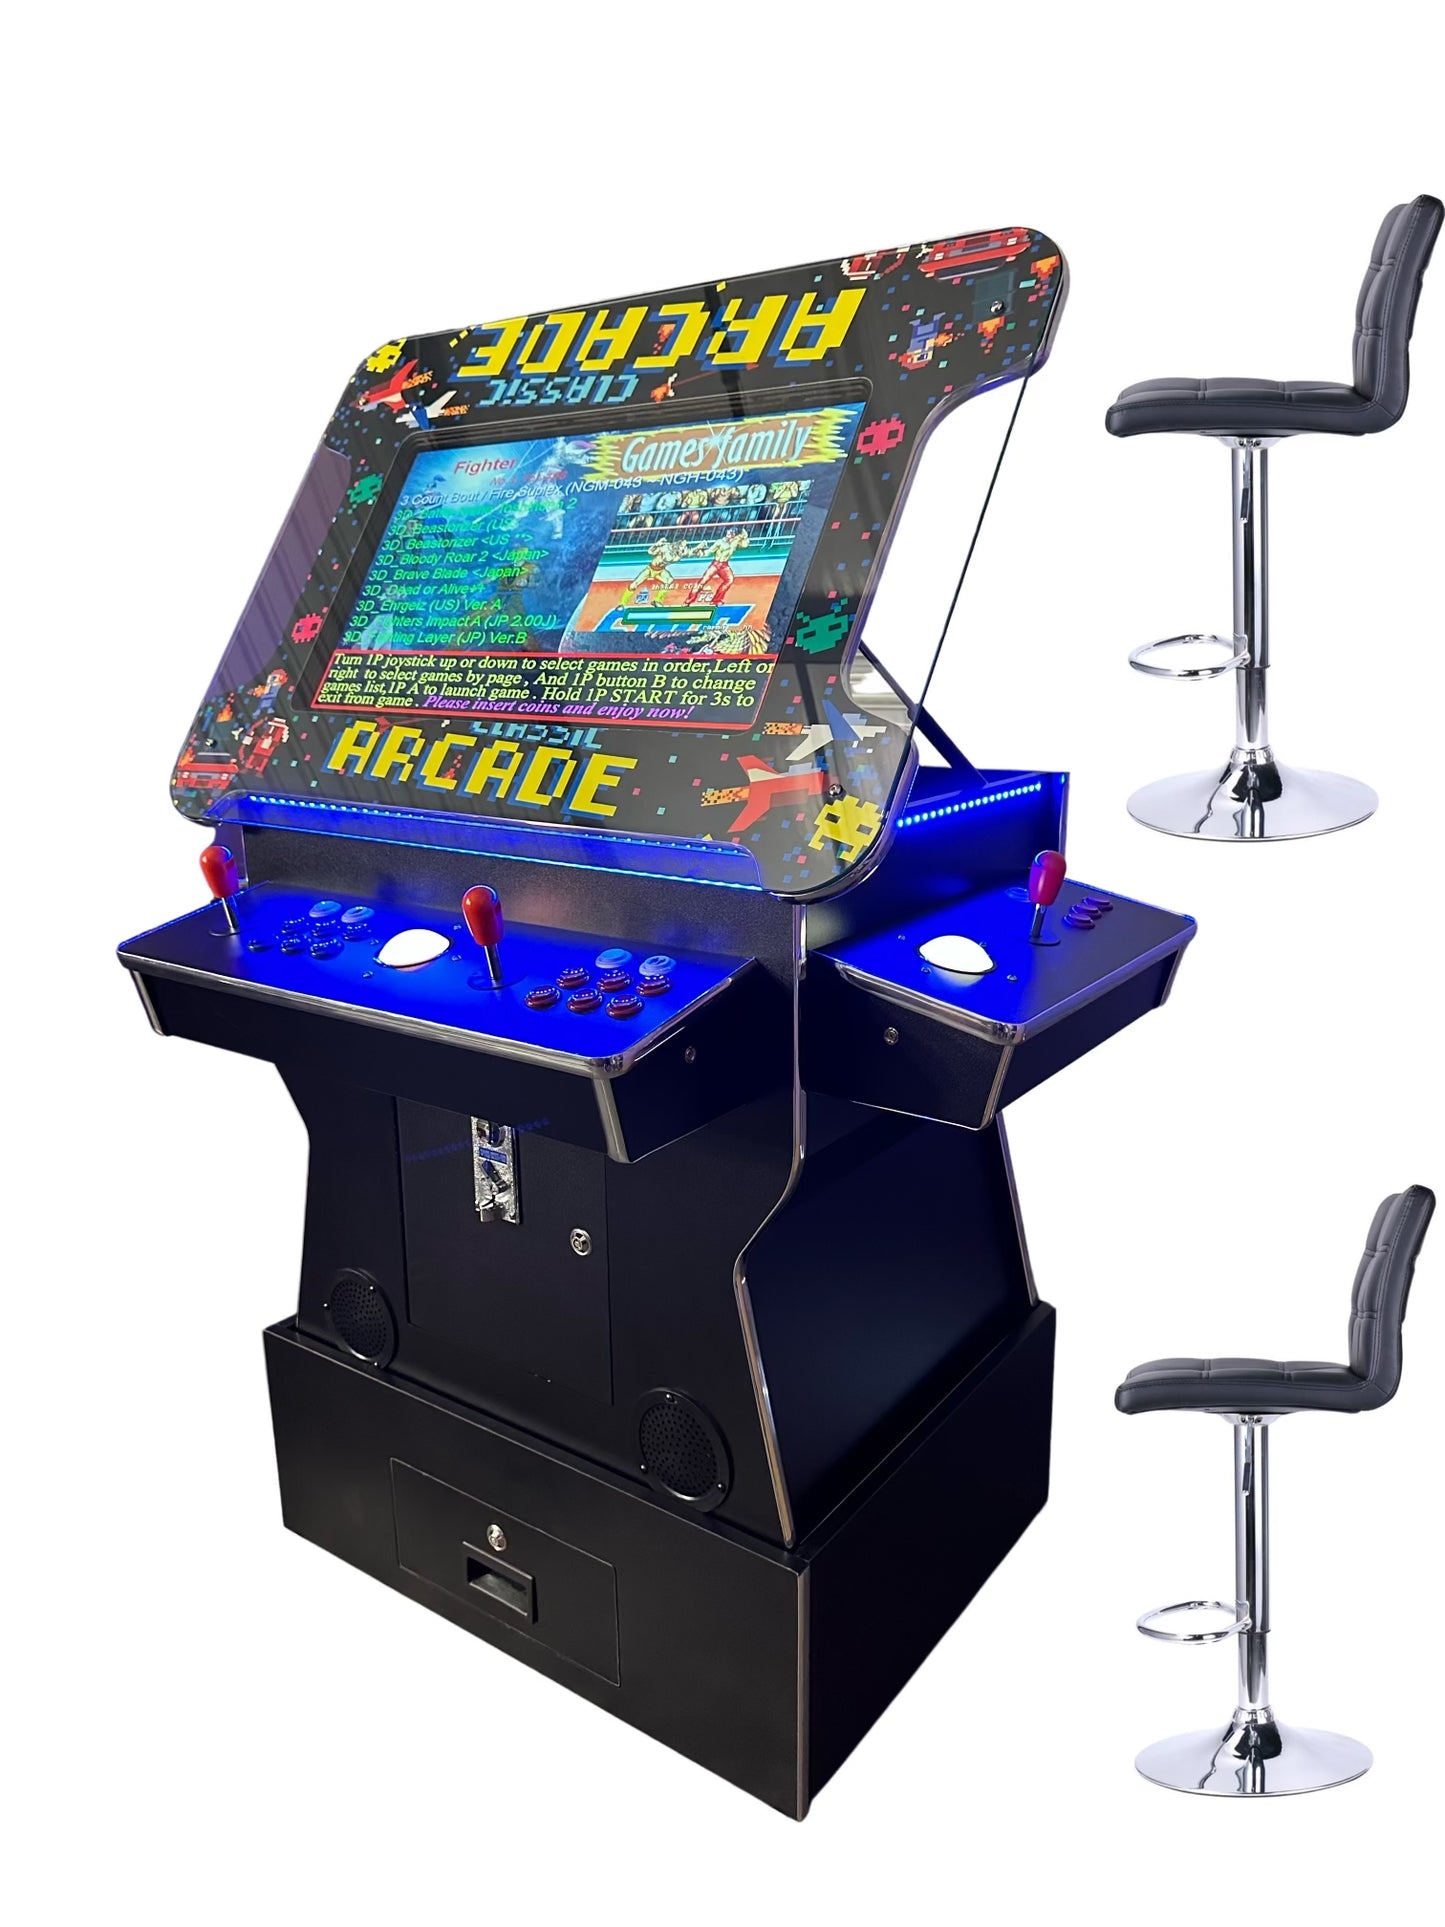 Cocktail Arcade Tilt lift up Arcades With Riser  machine Retro Commercial Grade  4600 Games